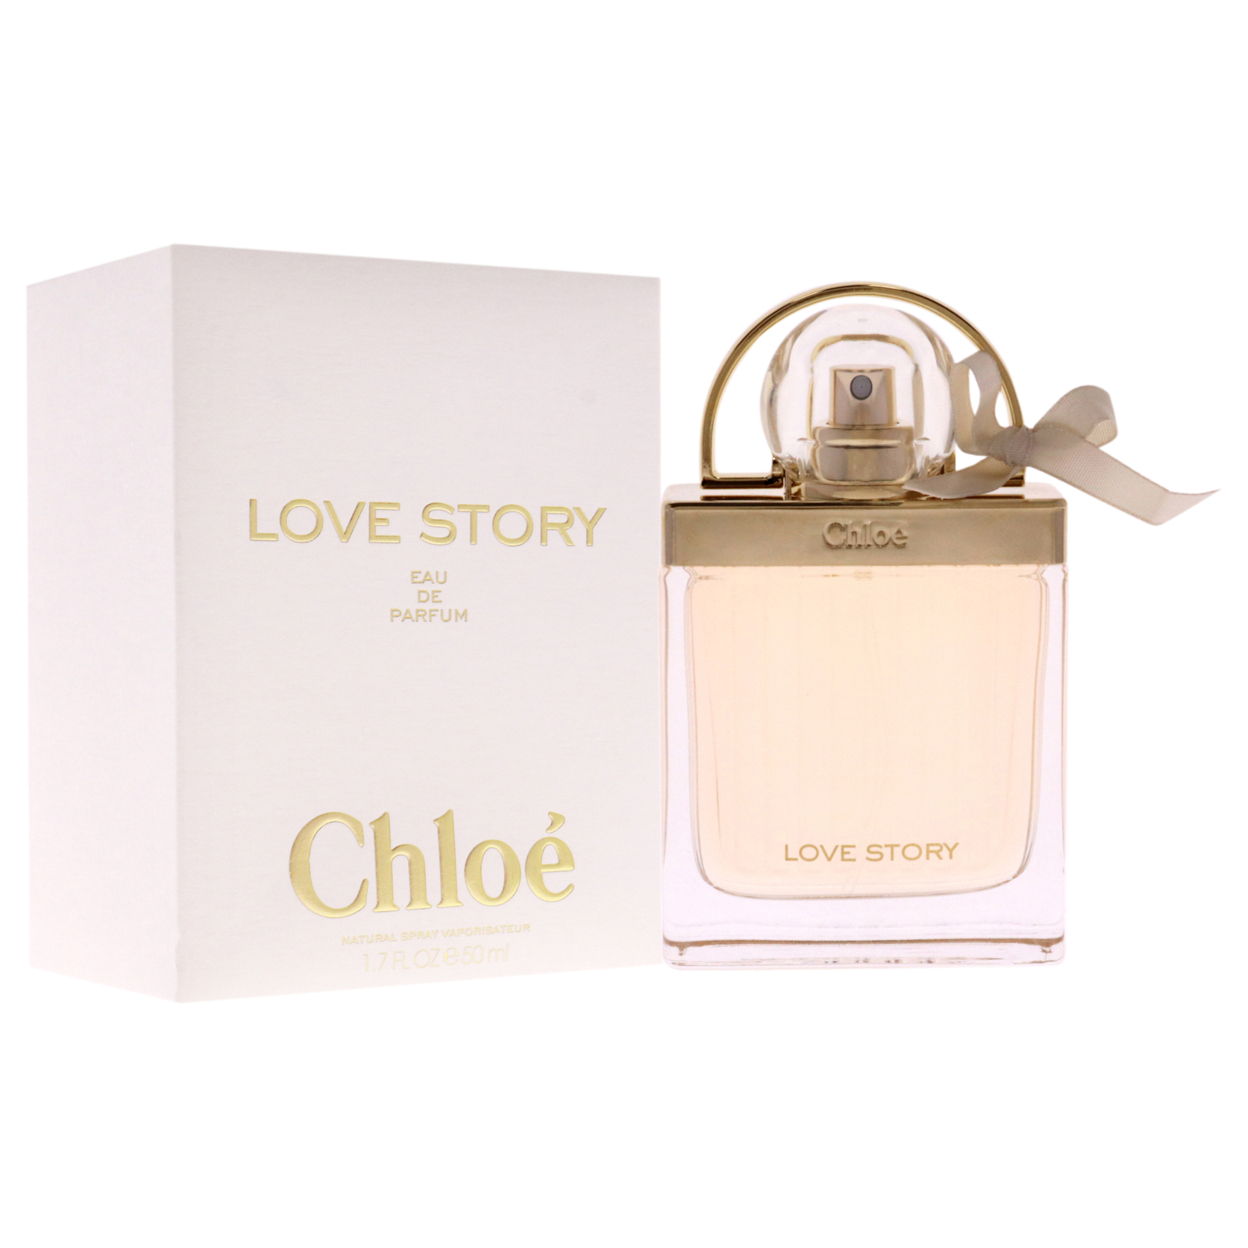 Chloe Love Story for Women Eau de Parfum Spray, 1.7 fl oz - image 3 of 6